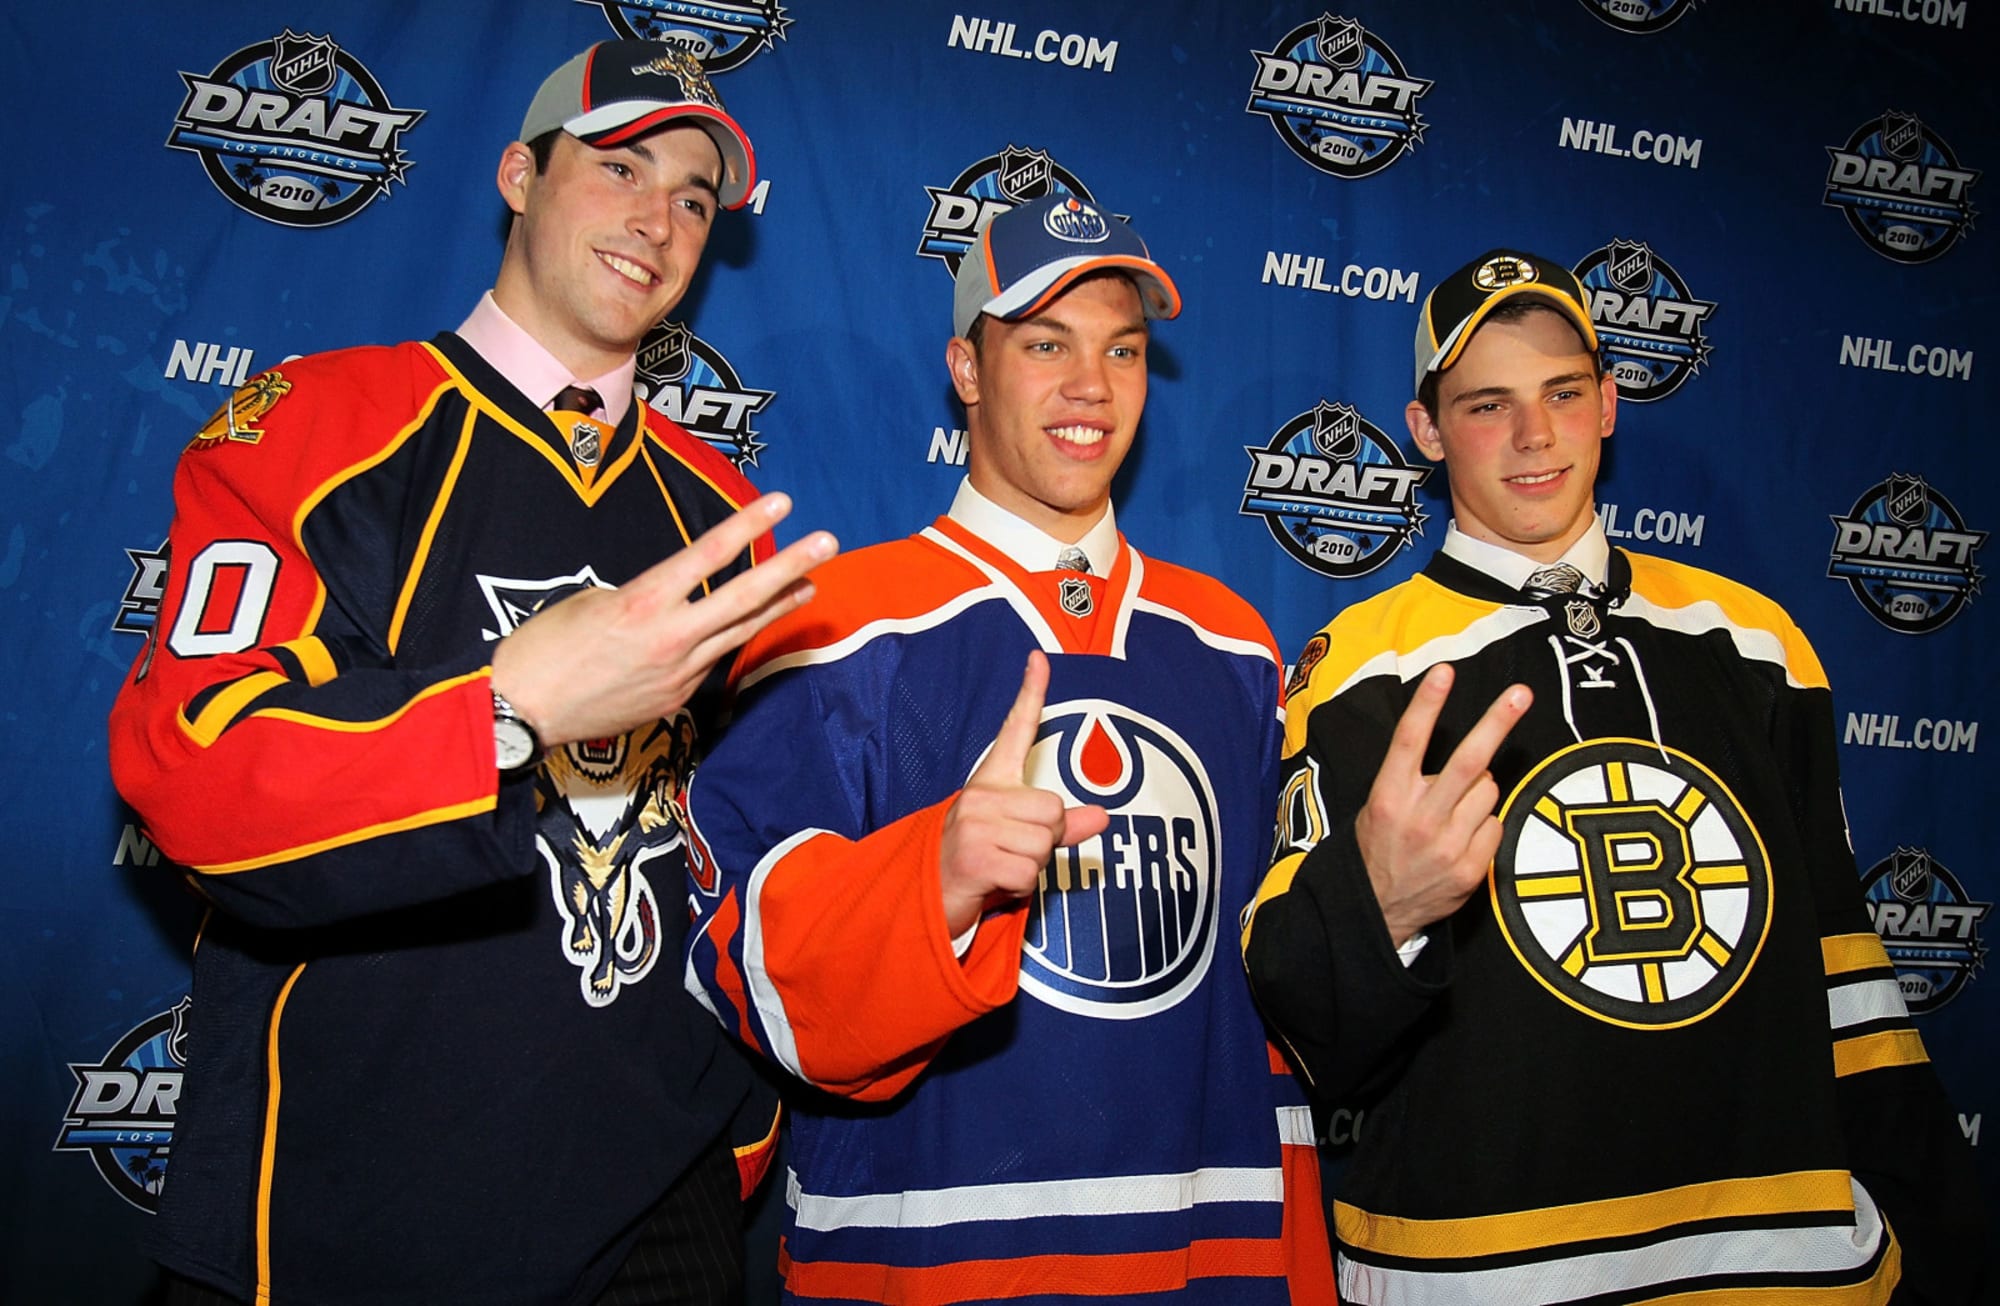 NHL Draft: Evaluating each team's 2010 